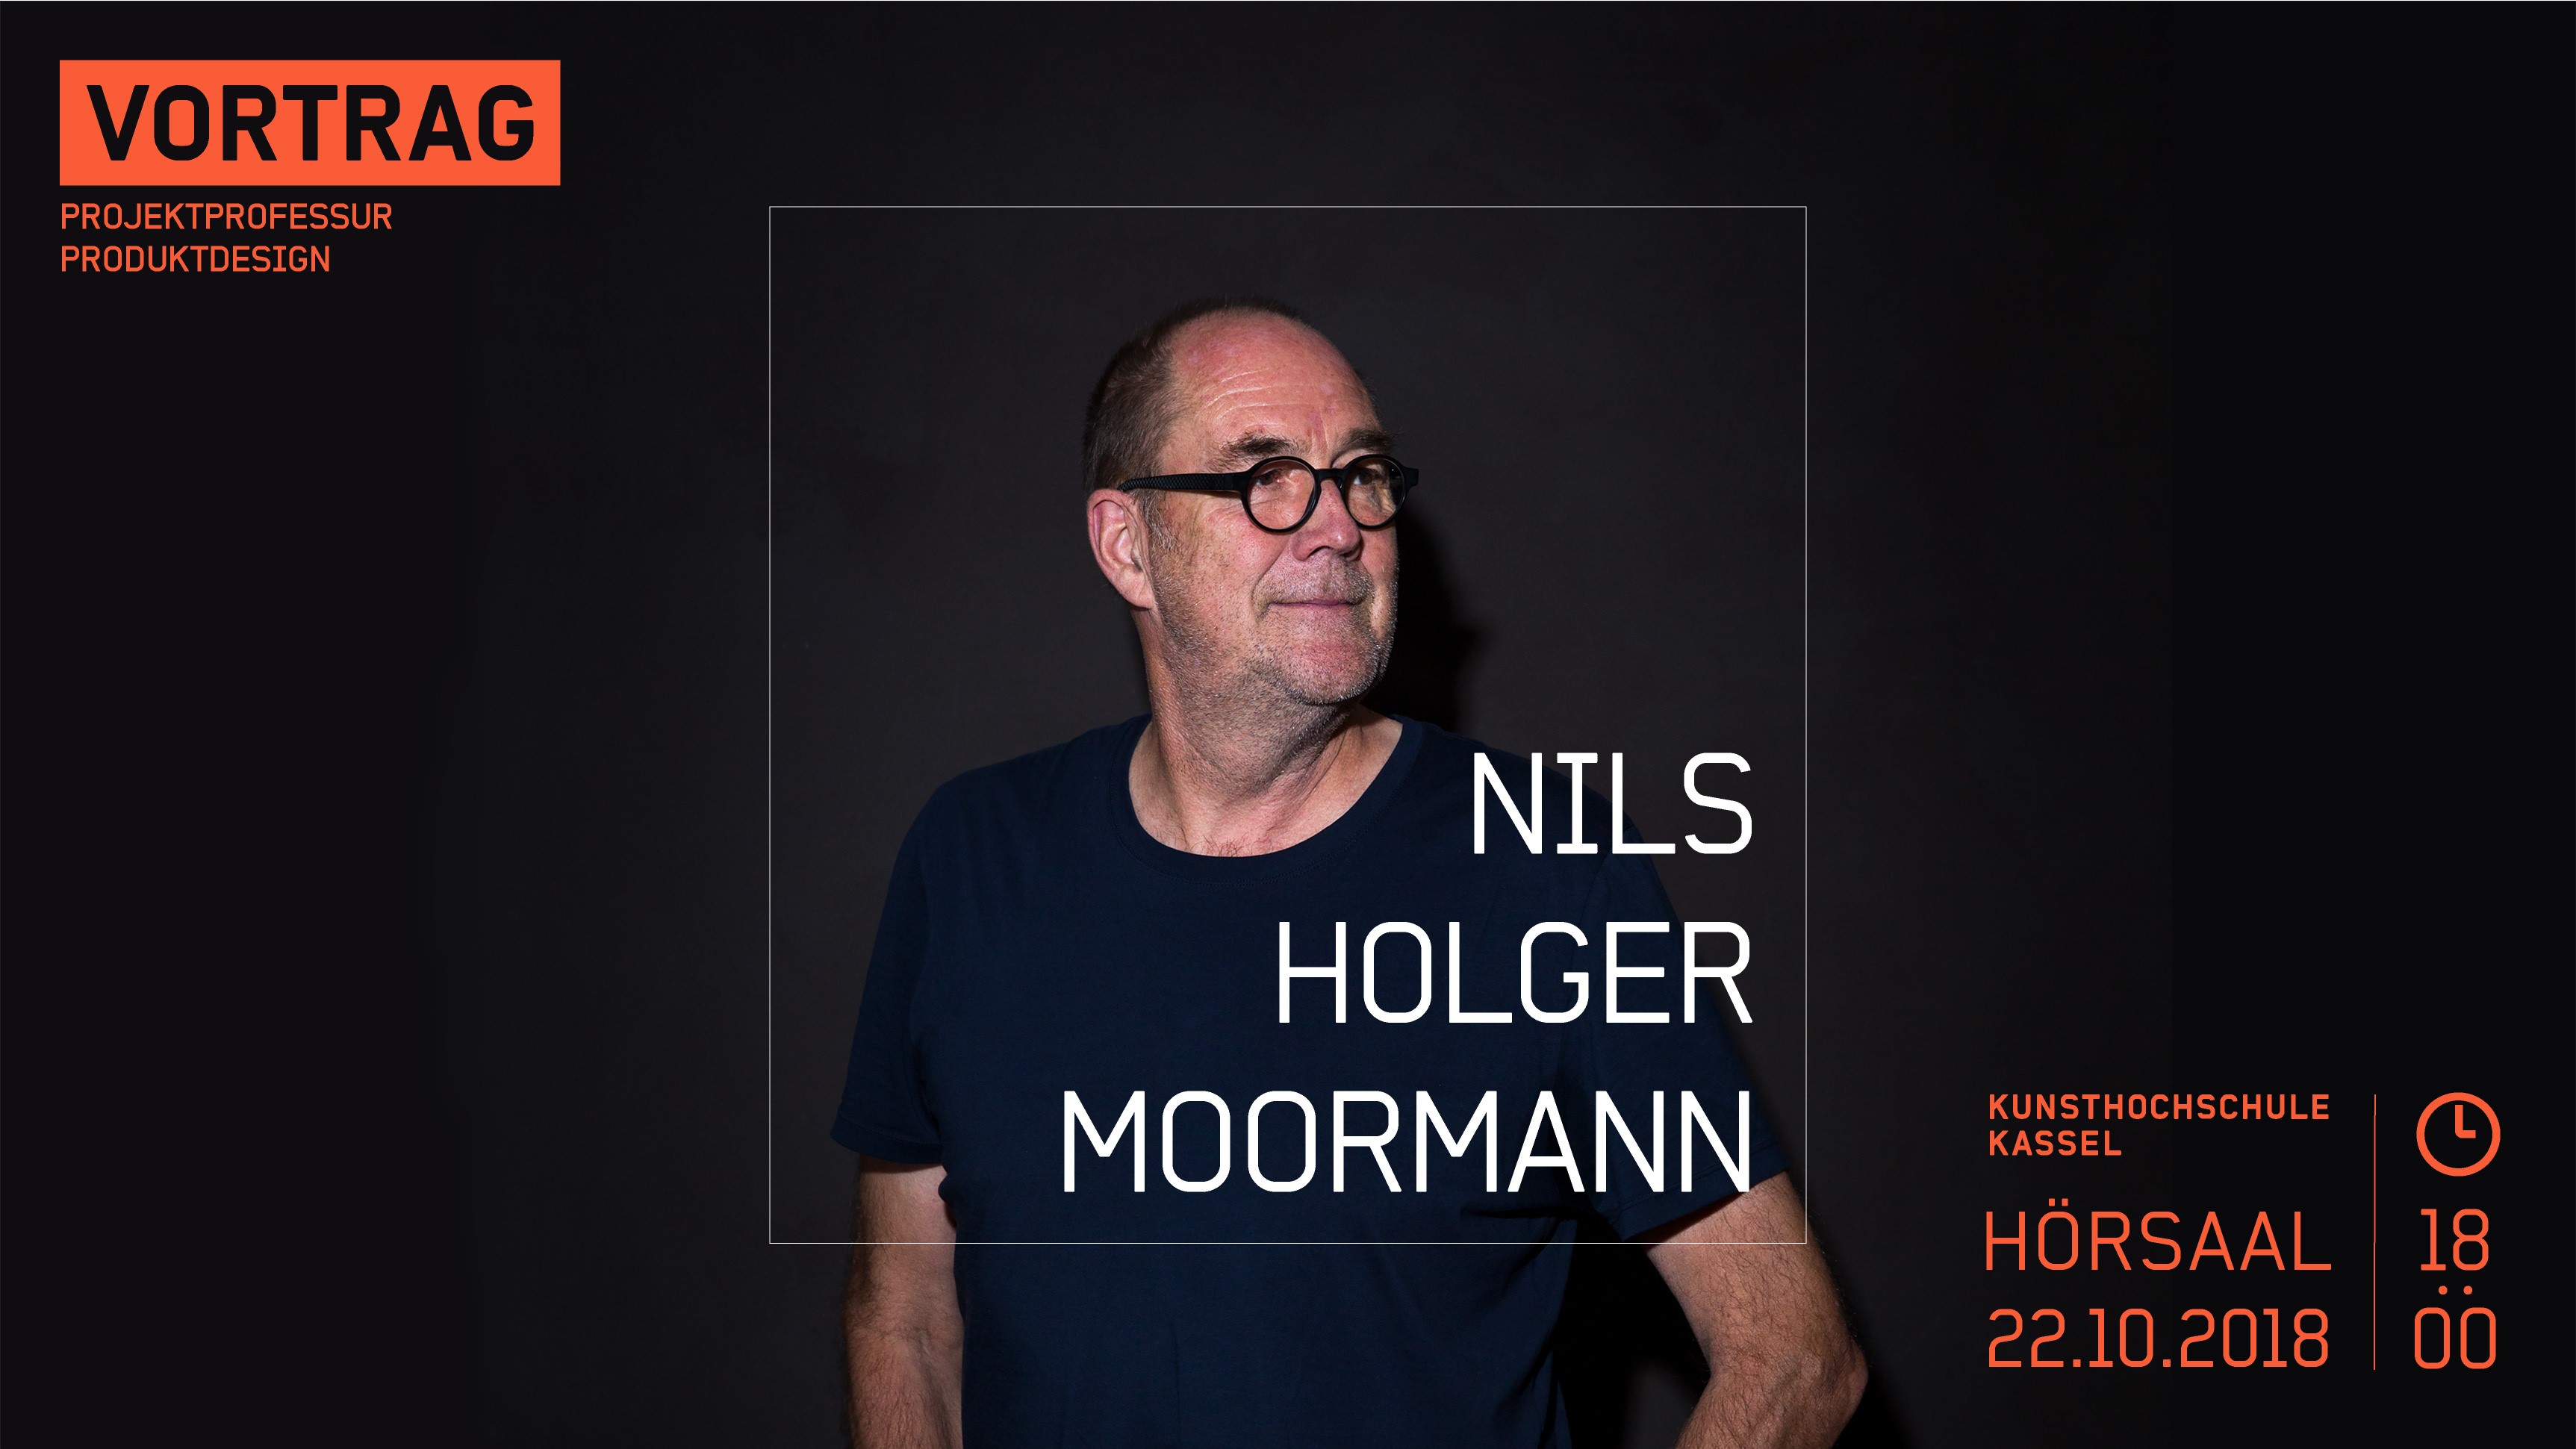 Nils Holger Moormann übernimmt Projektprofessur an der Kunsthochschule Kassel